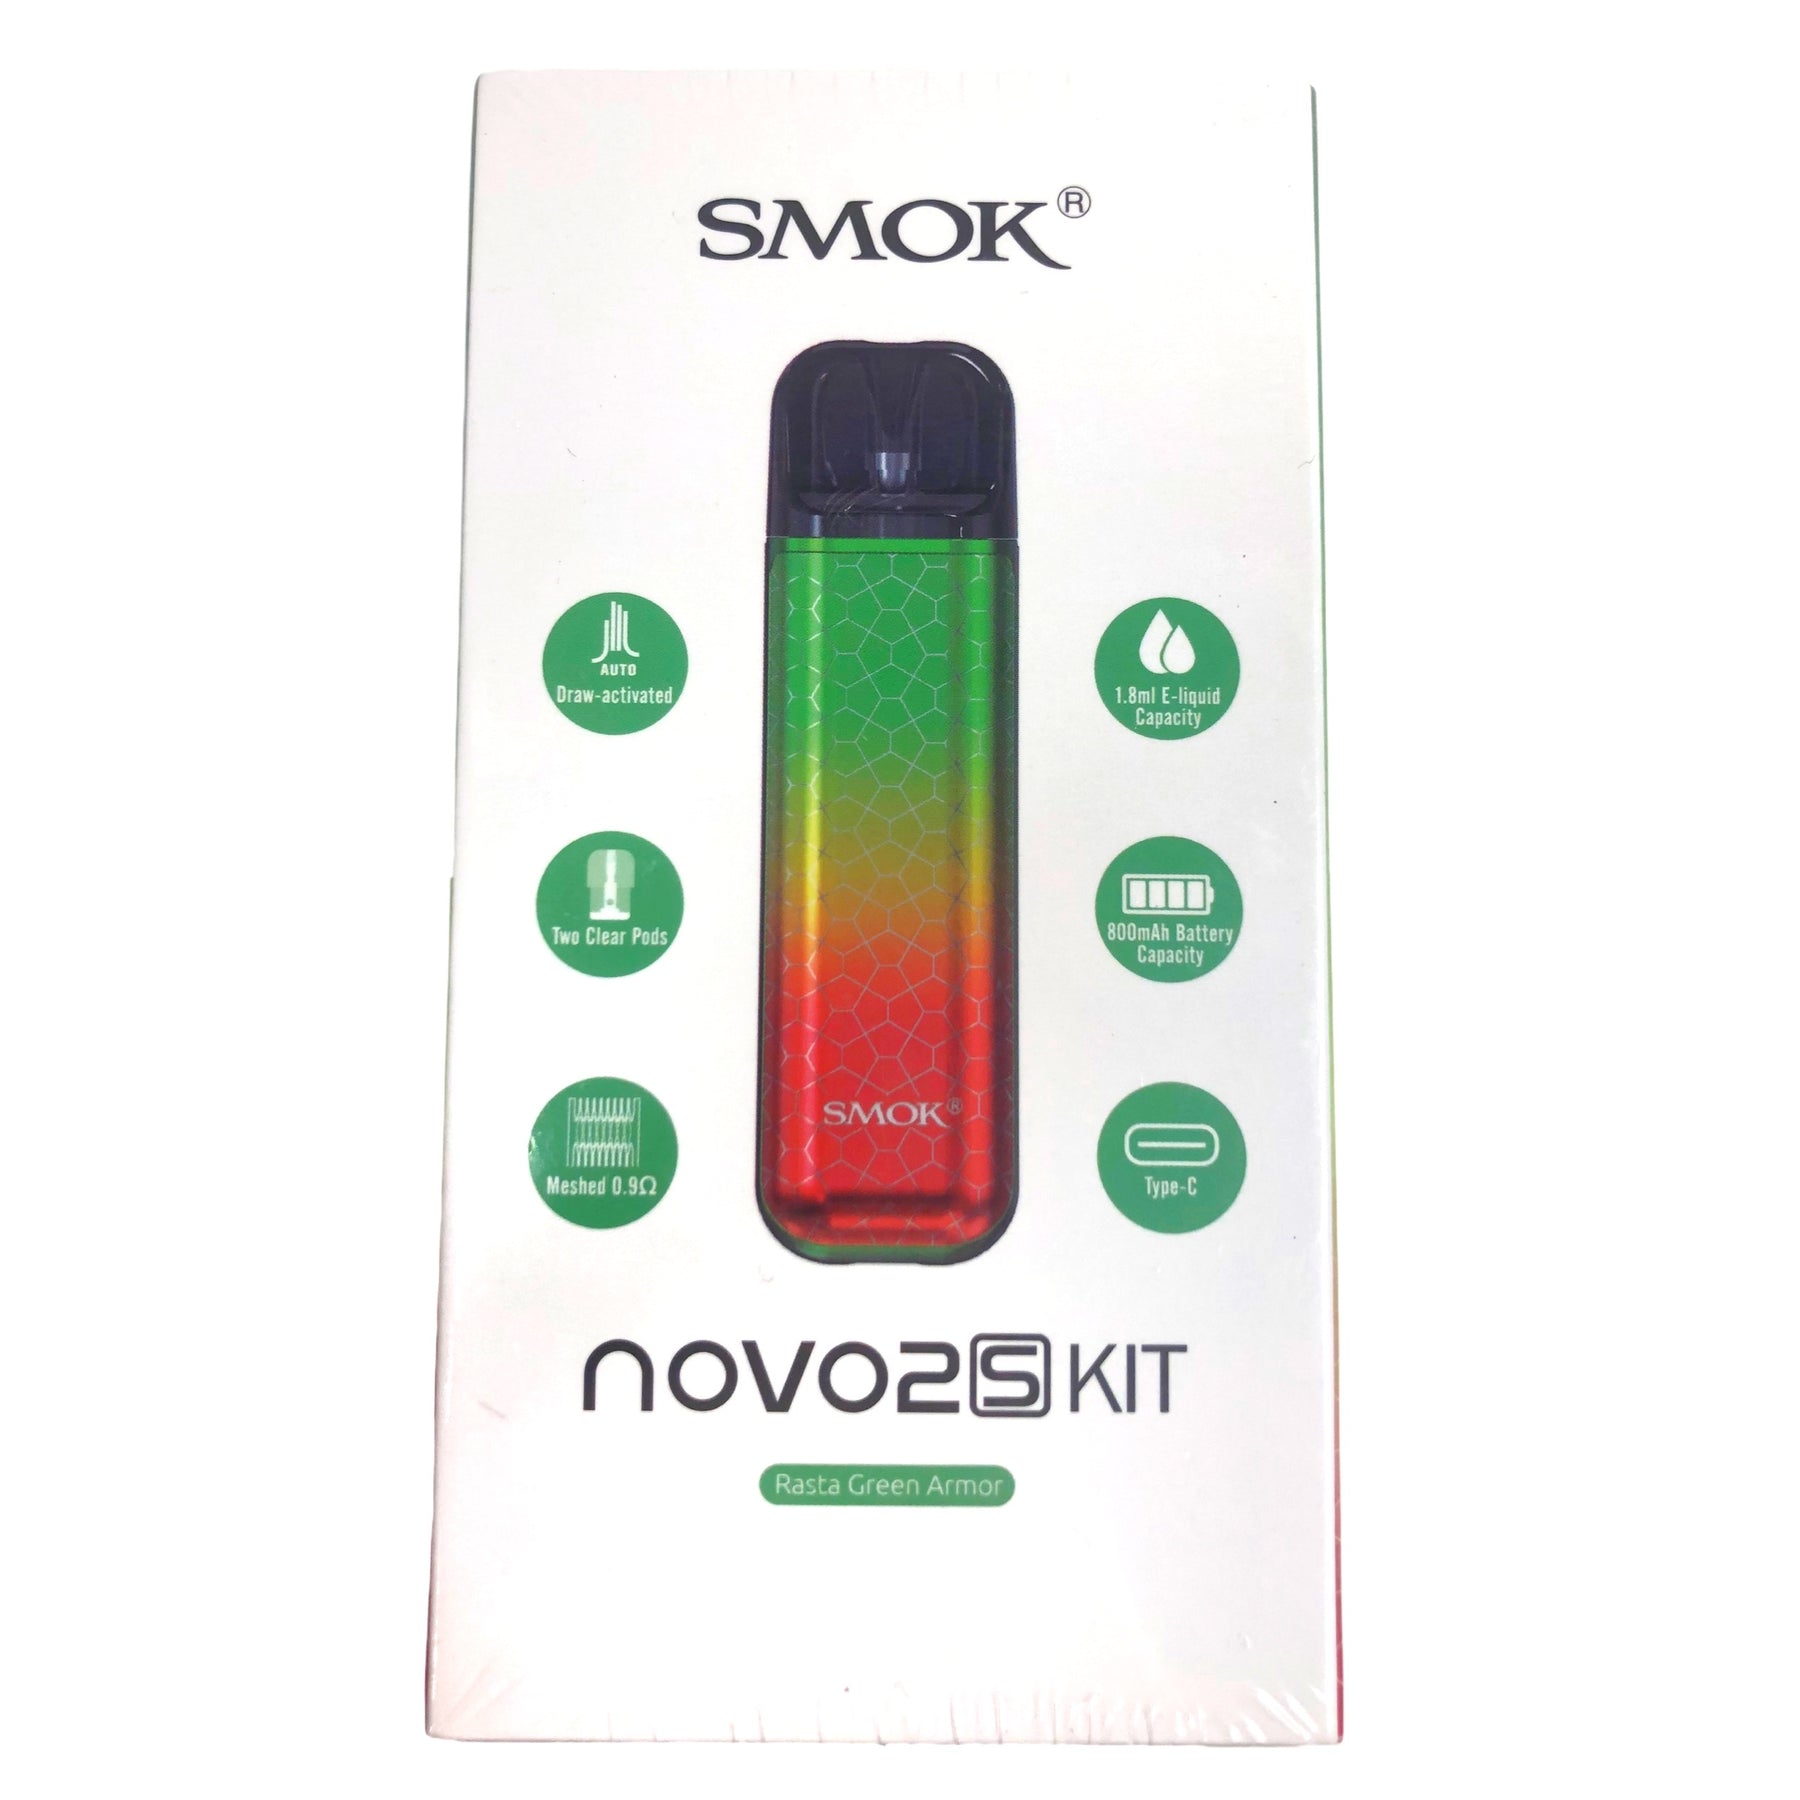 Smok Novo 2s Kit Rasta Green Armor Color